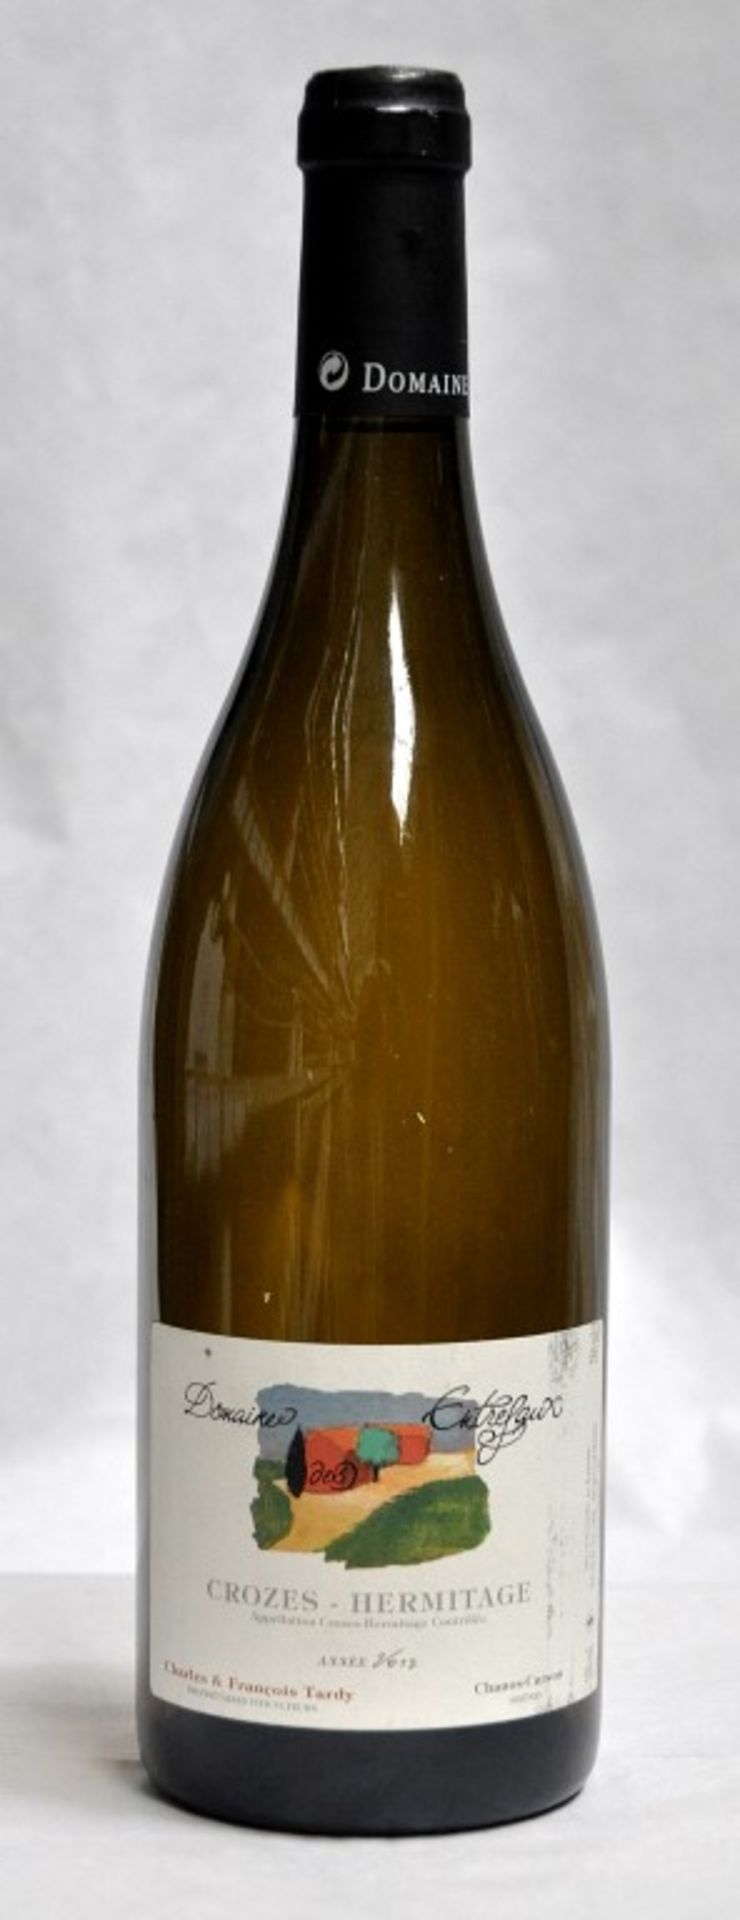 3 x Domaine Des Entrefaux Crozes-Hermitage Blanc - French Wine - 2012 - Bottle Sizes 75cl - Volume